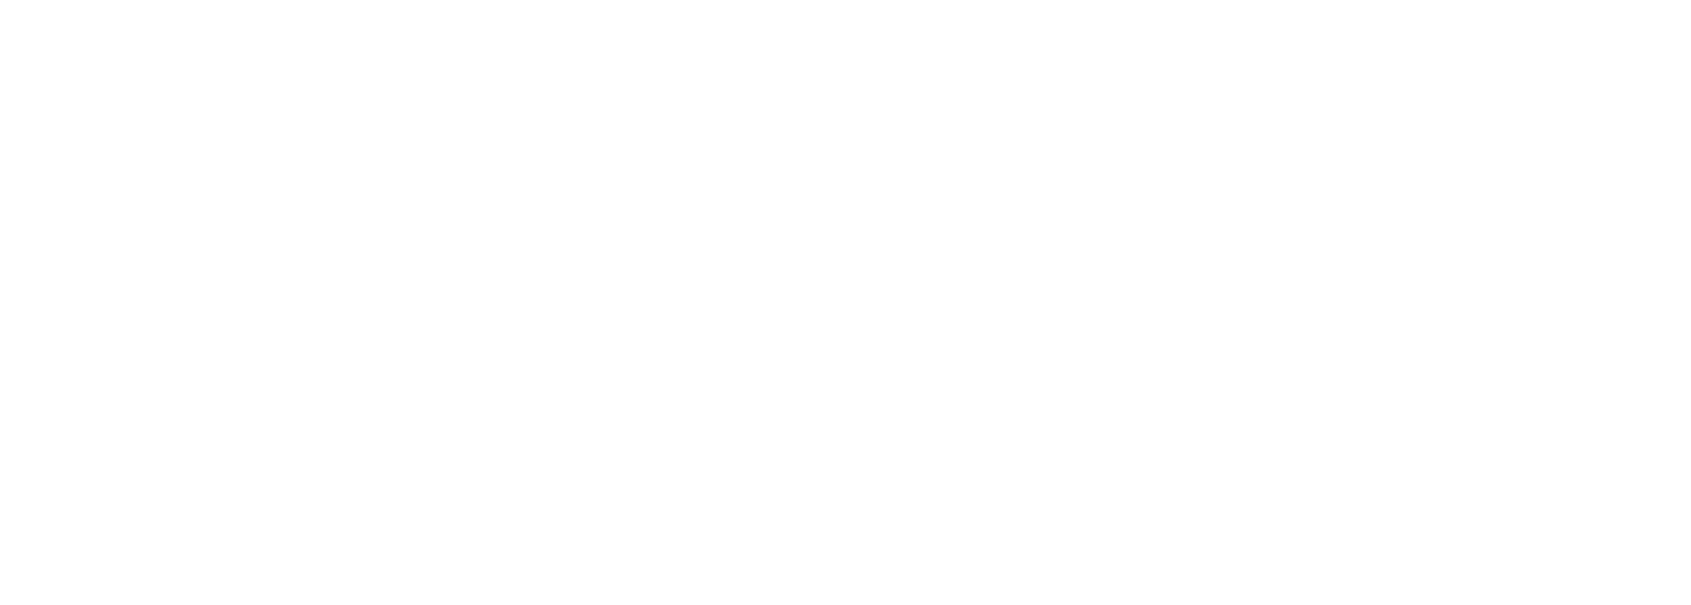 evan's auto logo in white on a black background